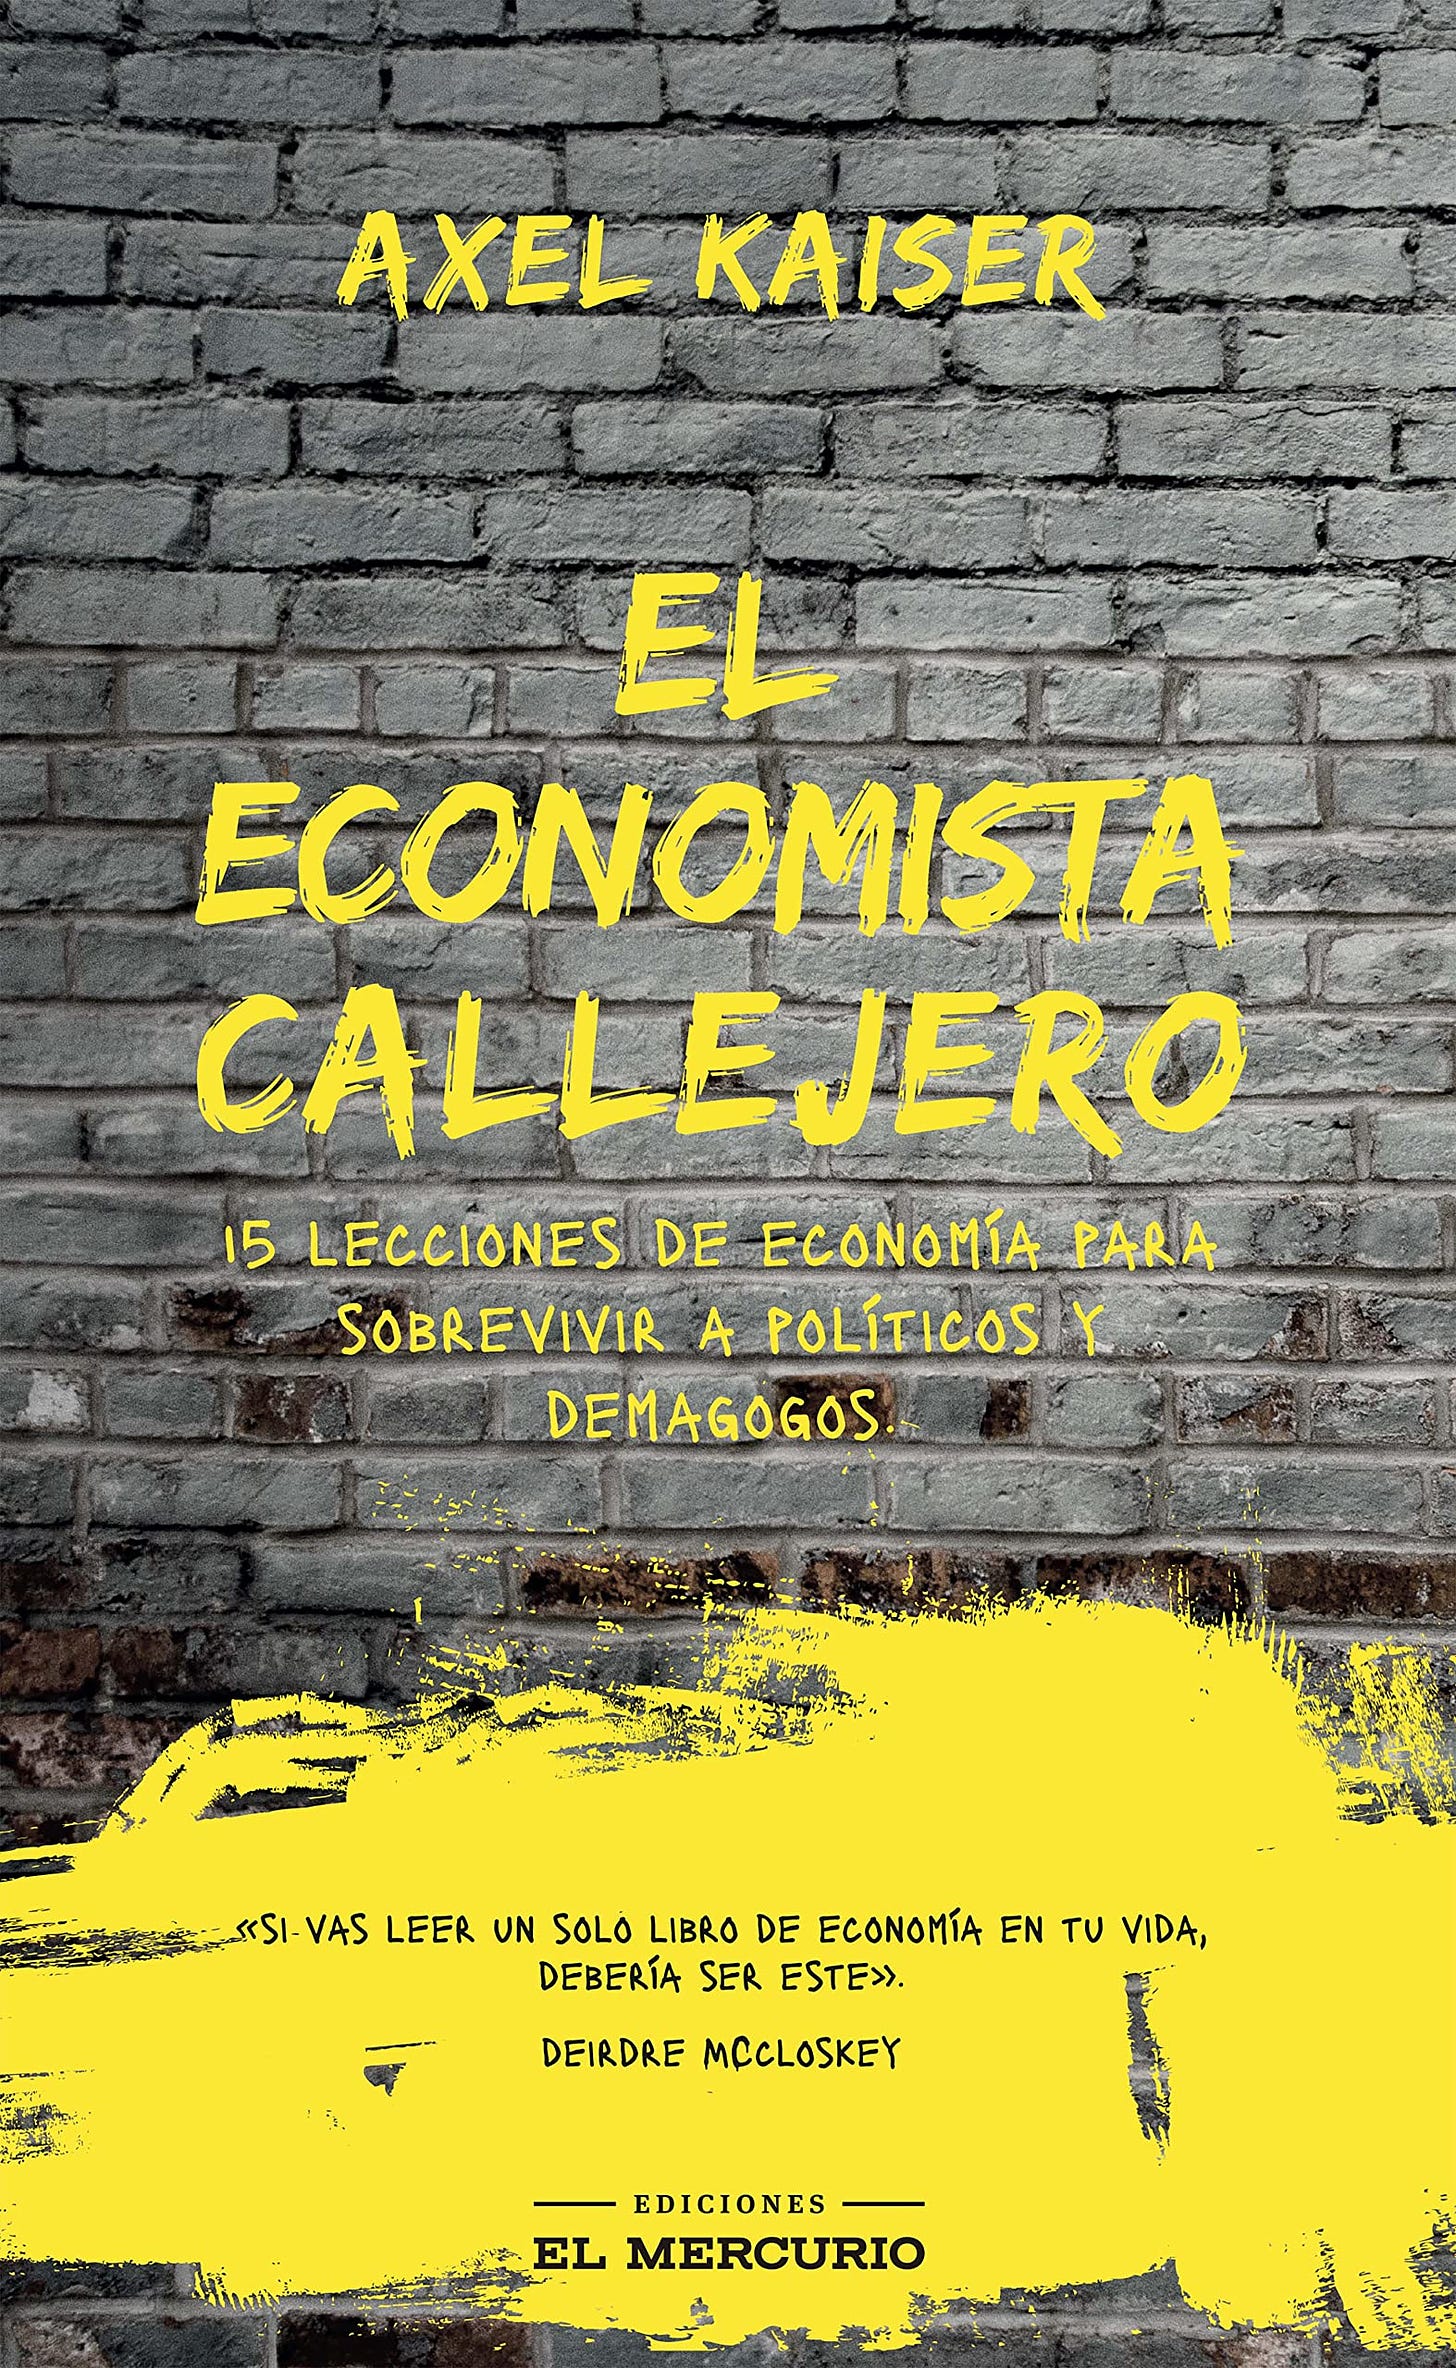 El economista callejero (Spanish Edition) by Axel Kaiser | Goodreads